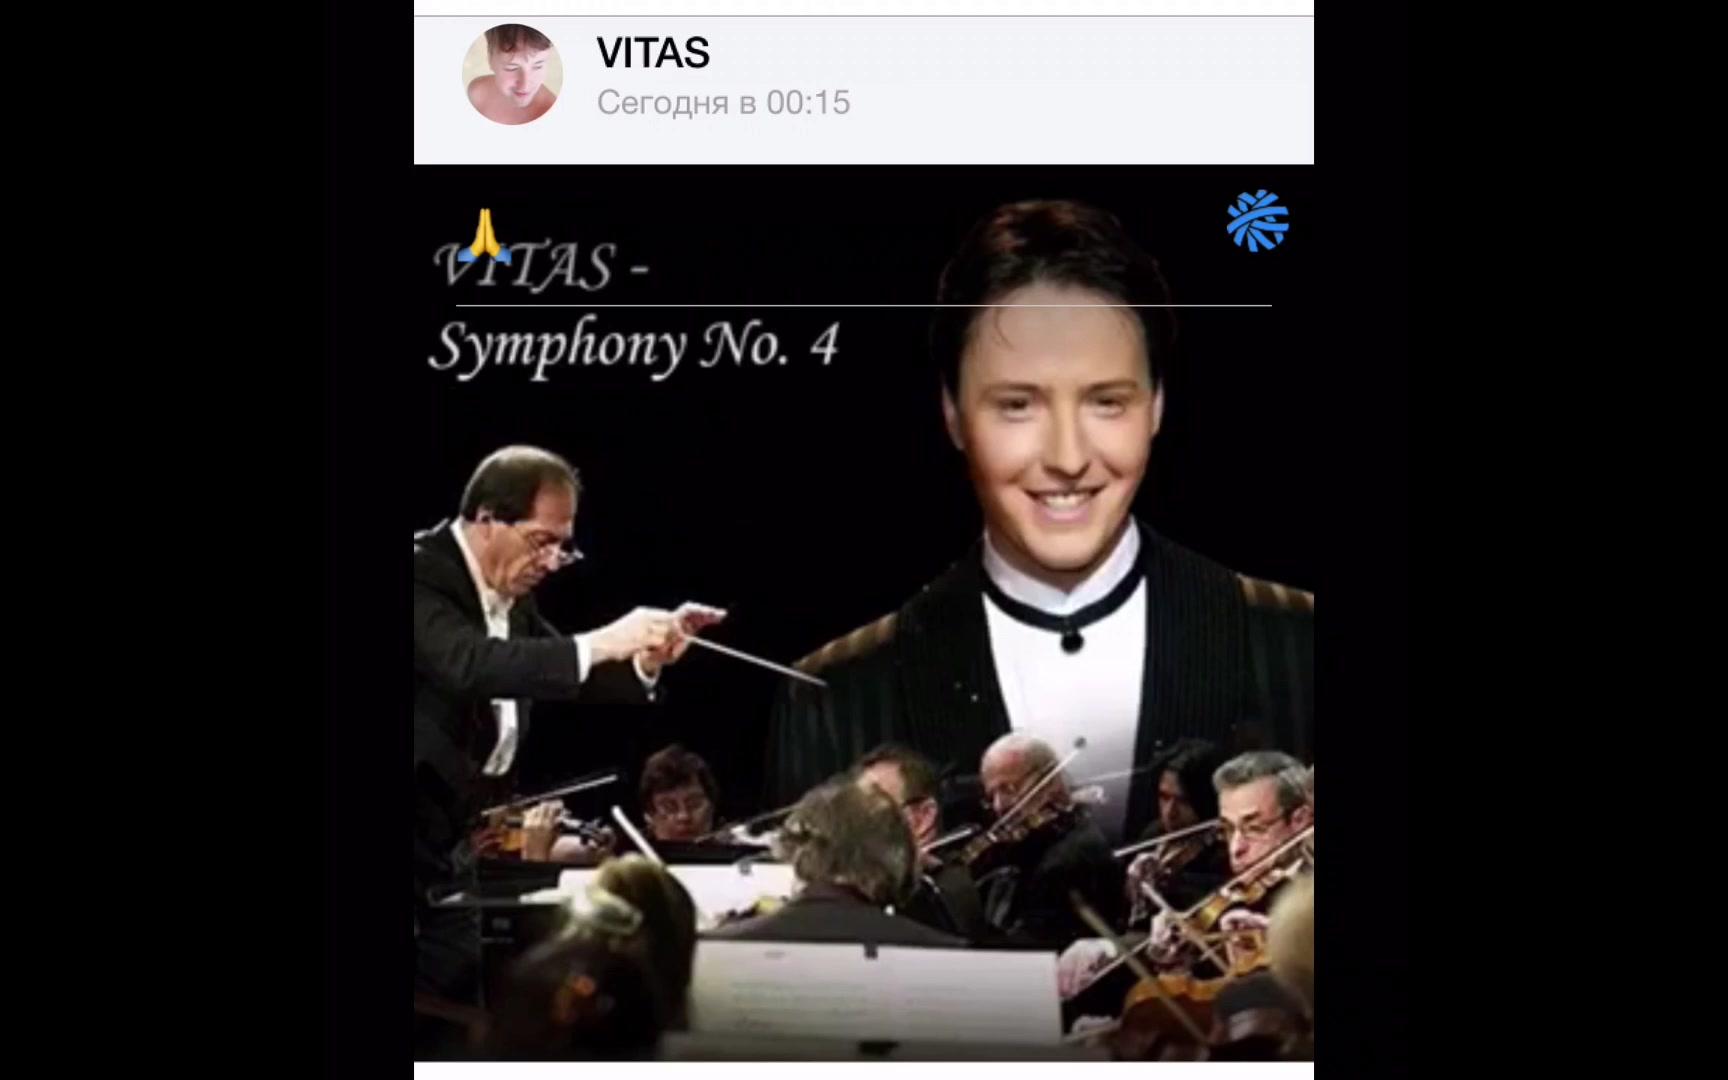 【VITAS】Vitas维塔斯封神高音《奉献》高清HD. 我母亲的歌演唱会. 2003/11/01.-叫我老乌龟-巴士-哔哩哔哩视频